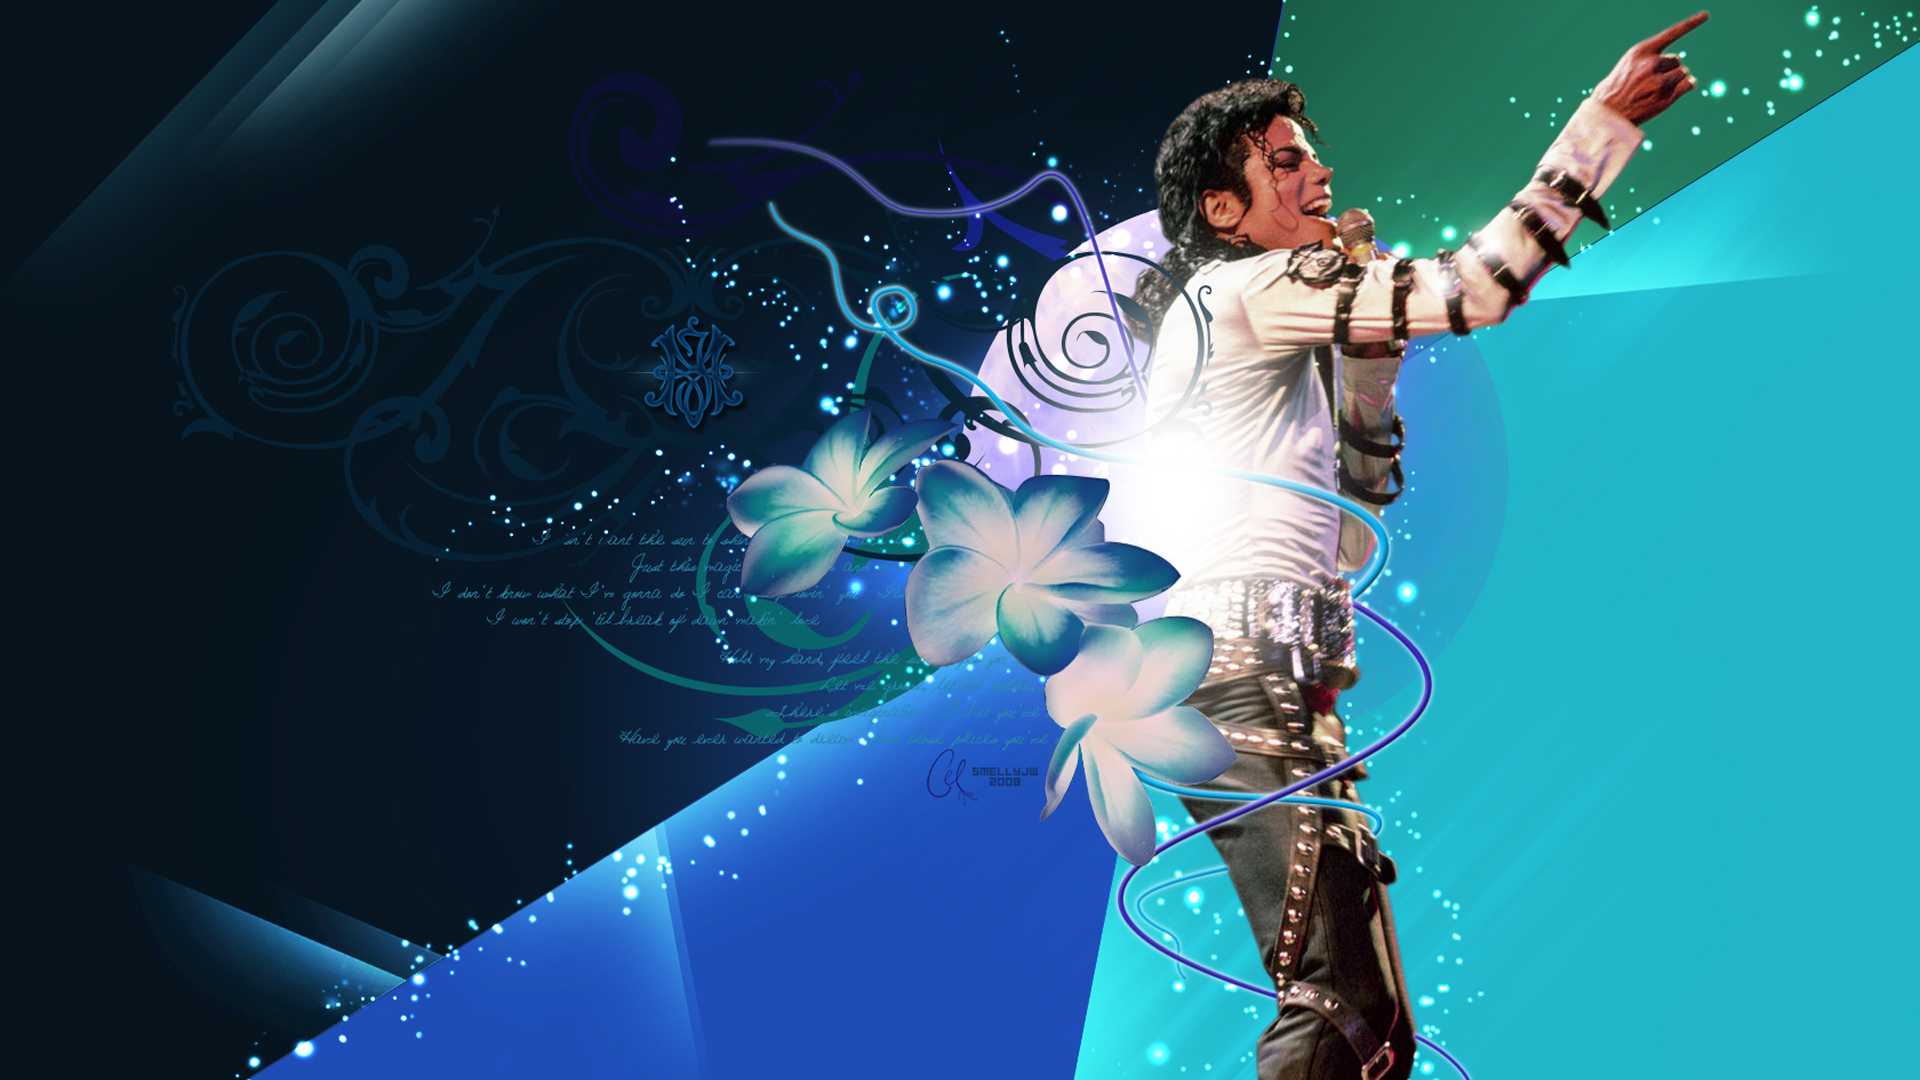 Michael Jackson Wallpaper HD Image Of Smartphone